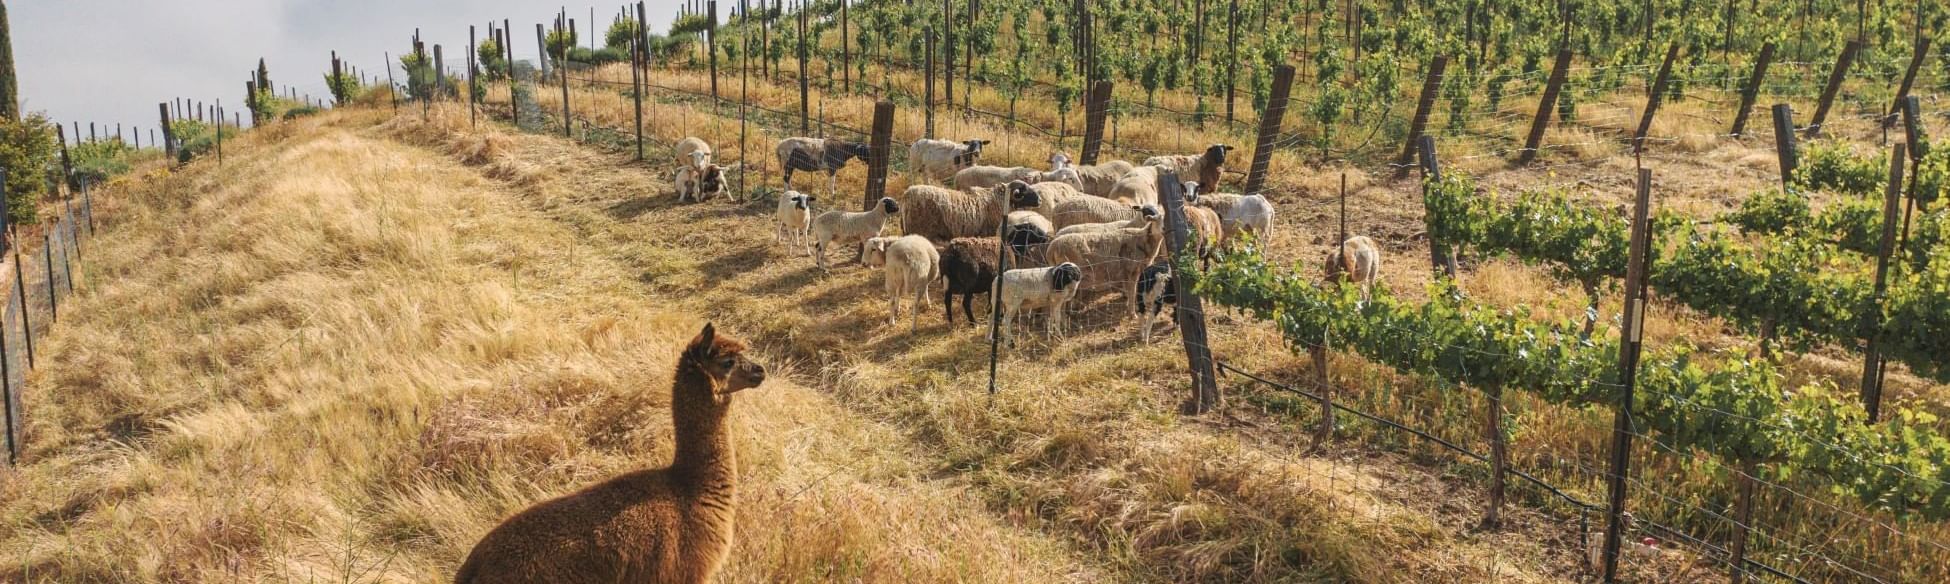 An alpaca looking towards a wine vineyard and a heard of goats roaming the vineyard